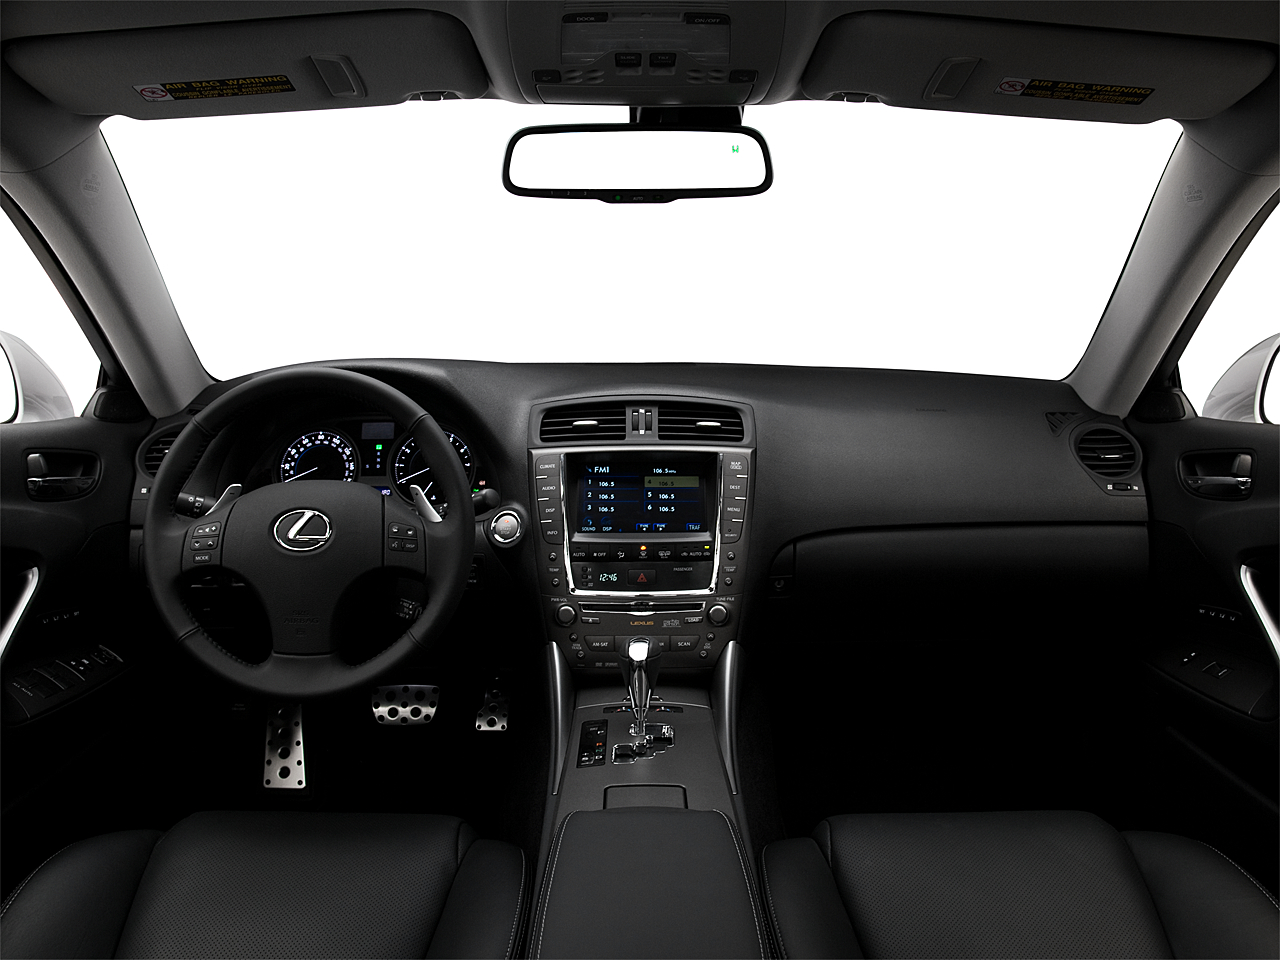 2009 Lexus IS 350 4dr Sedan - Research - GrooveCar